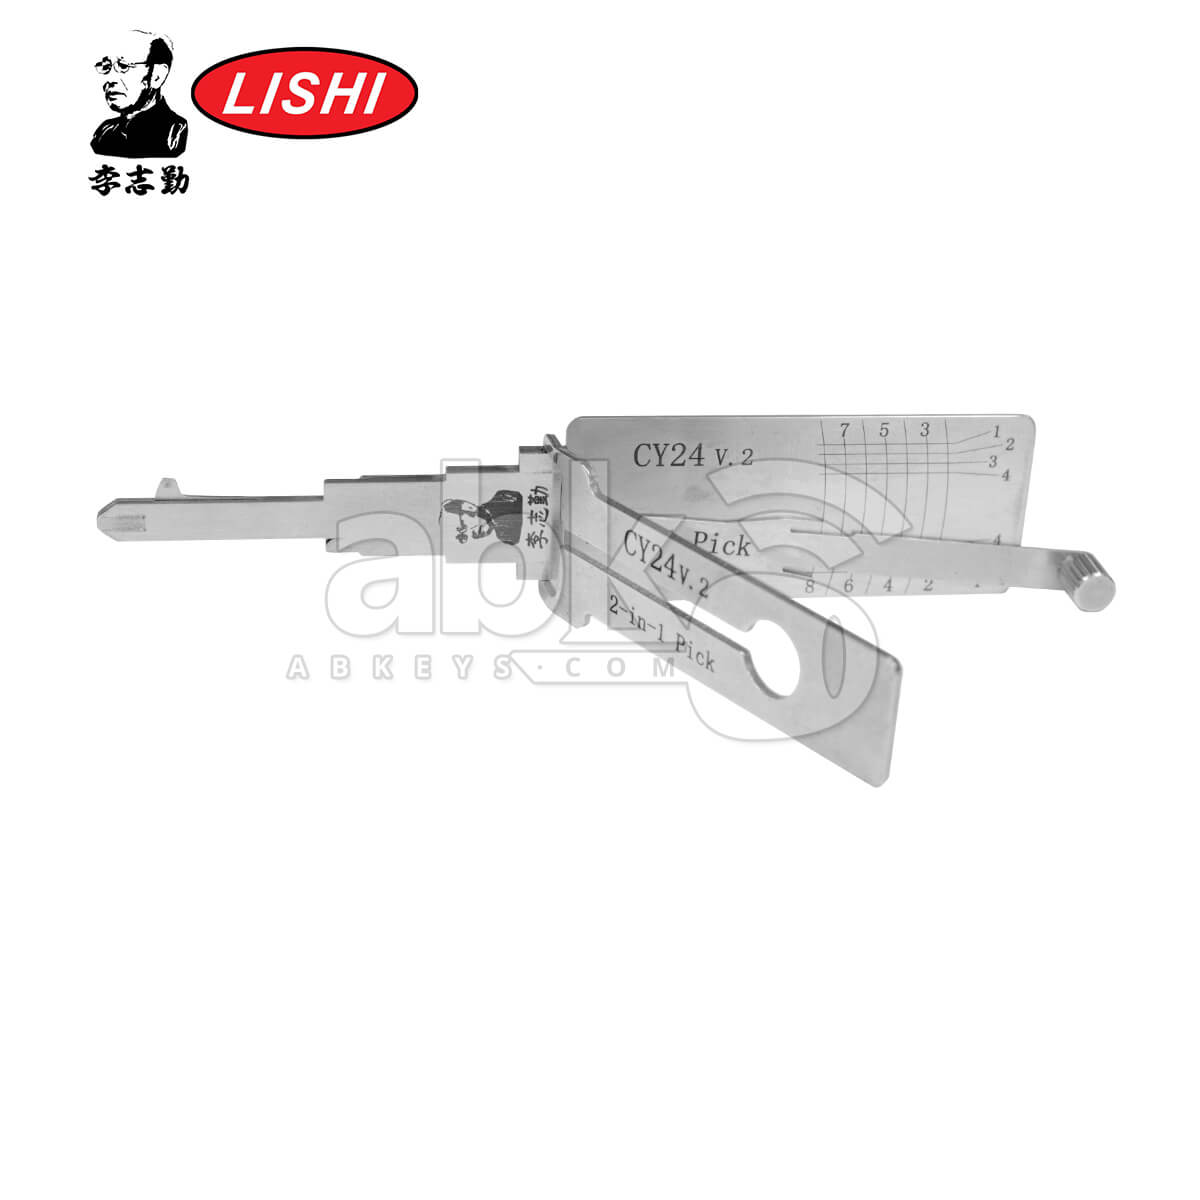 Original Lishi CY24 8Cut 2-in-1 Pick & Decoder for Chrysler Lishi Tool - ABK-1493 - ABKEYS.COM